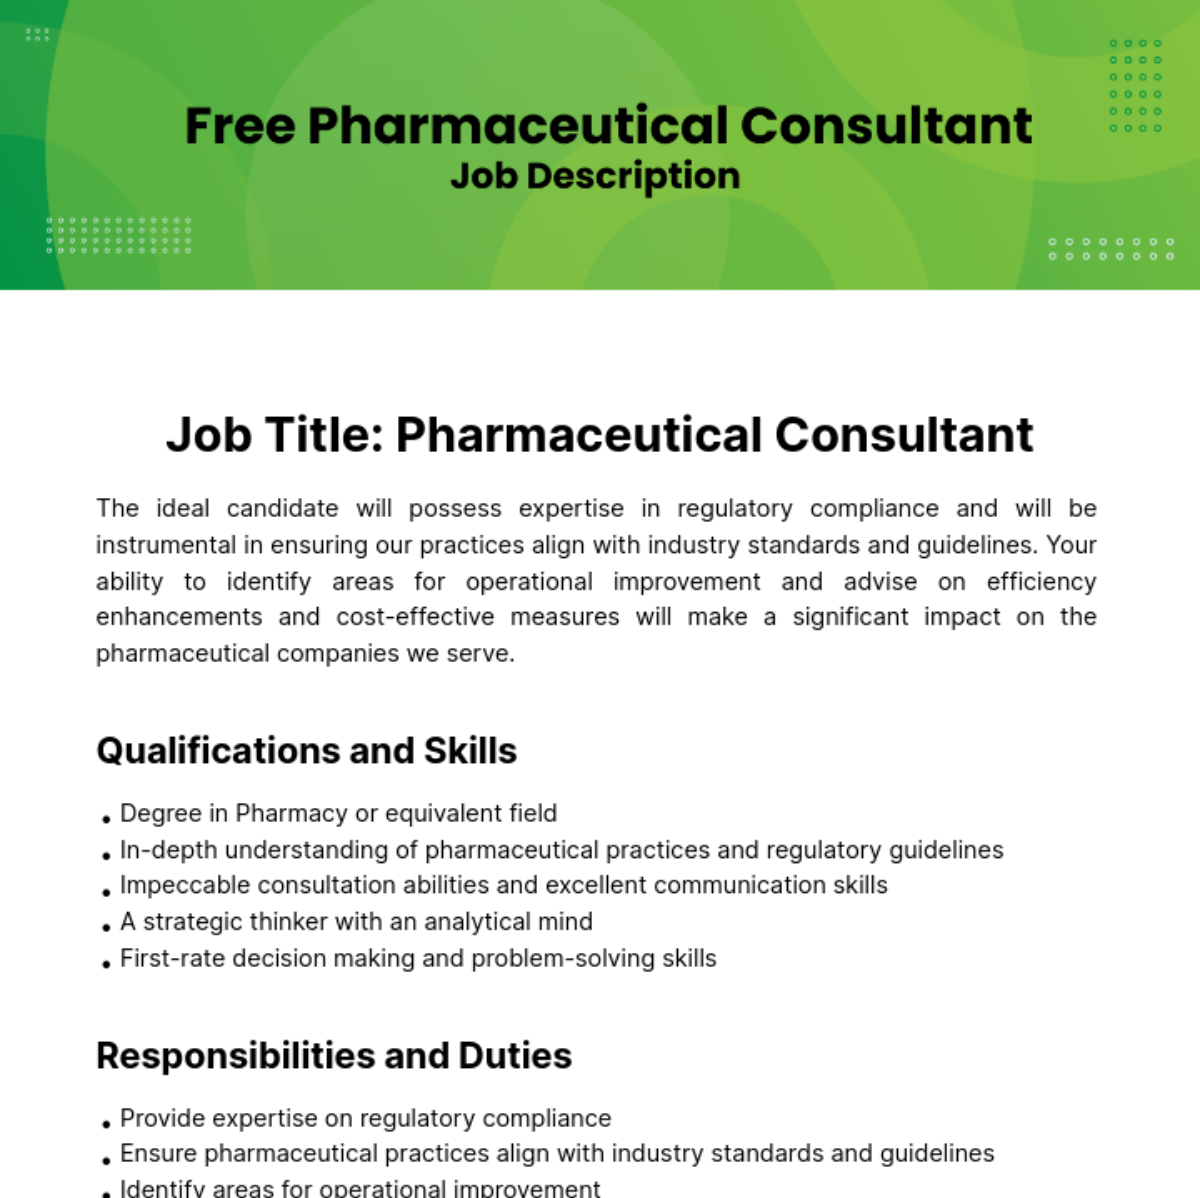 Free Pharmaceutical Consultant Job Description Template